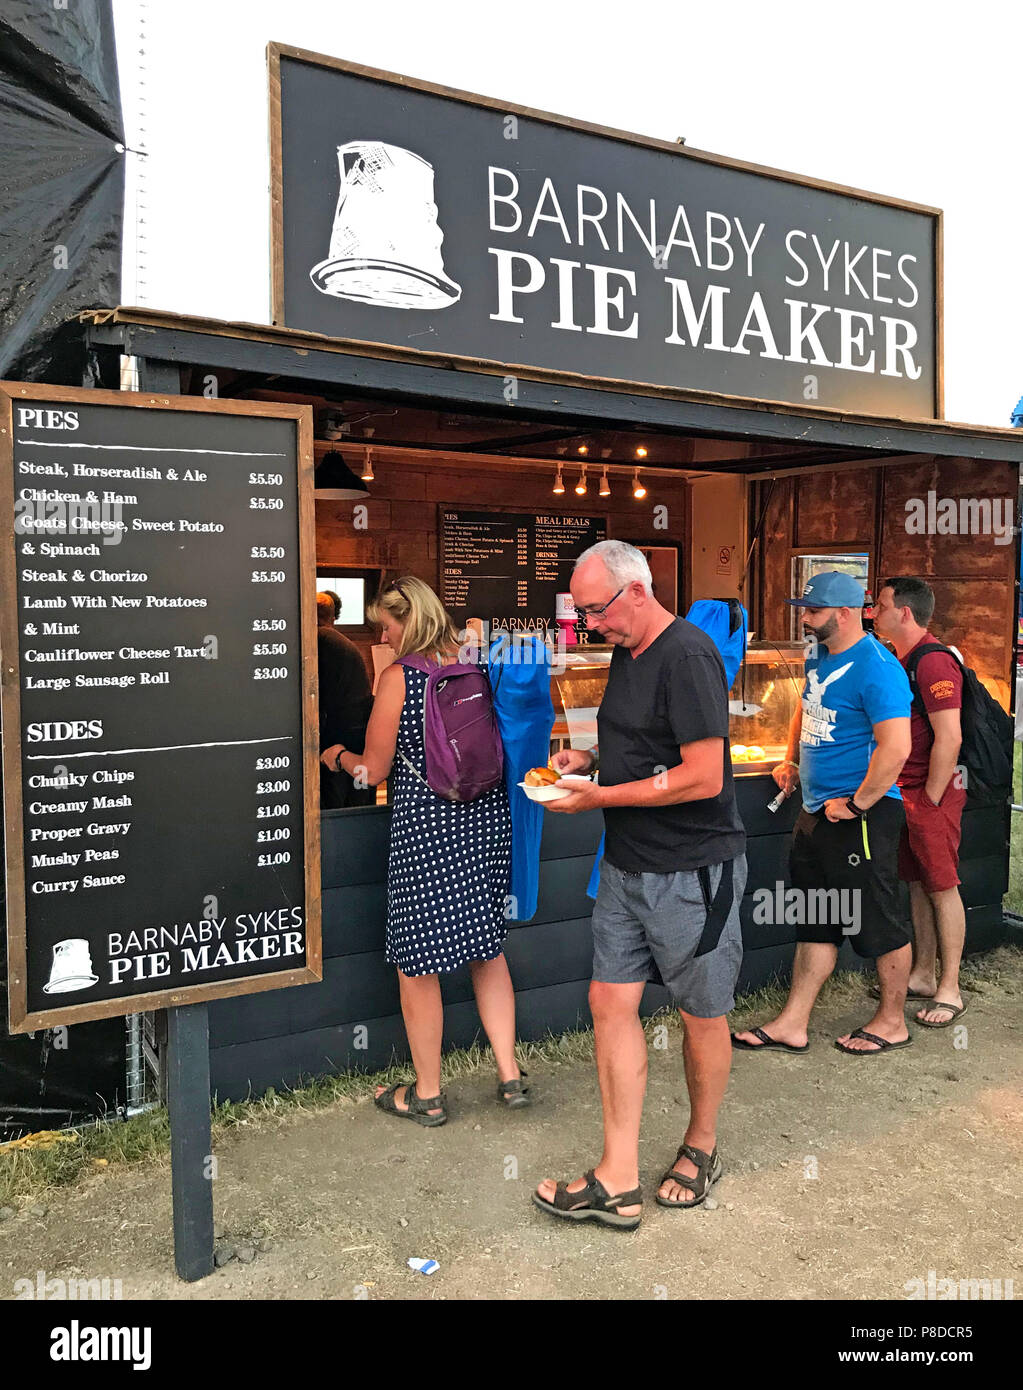 Barnaby Sykes Pie Maker stall, festival food, Silverstone Woodlands, Grand Prix, Northampton, England, UK Stock Photo